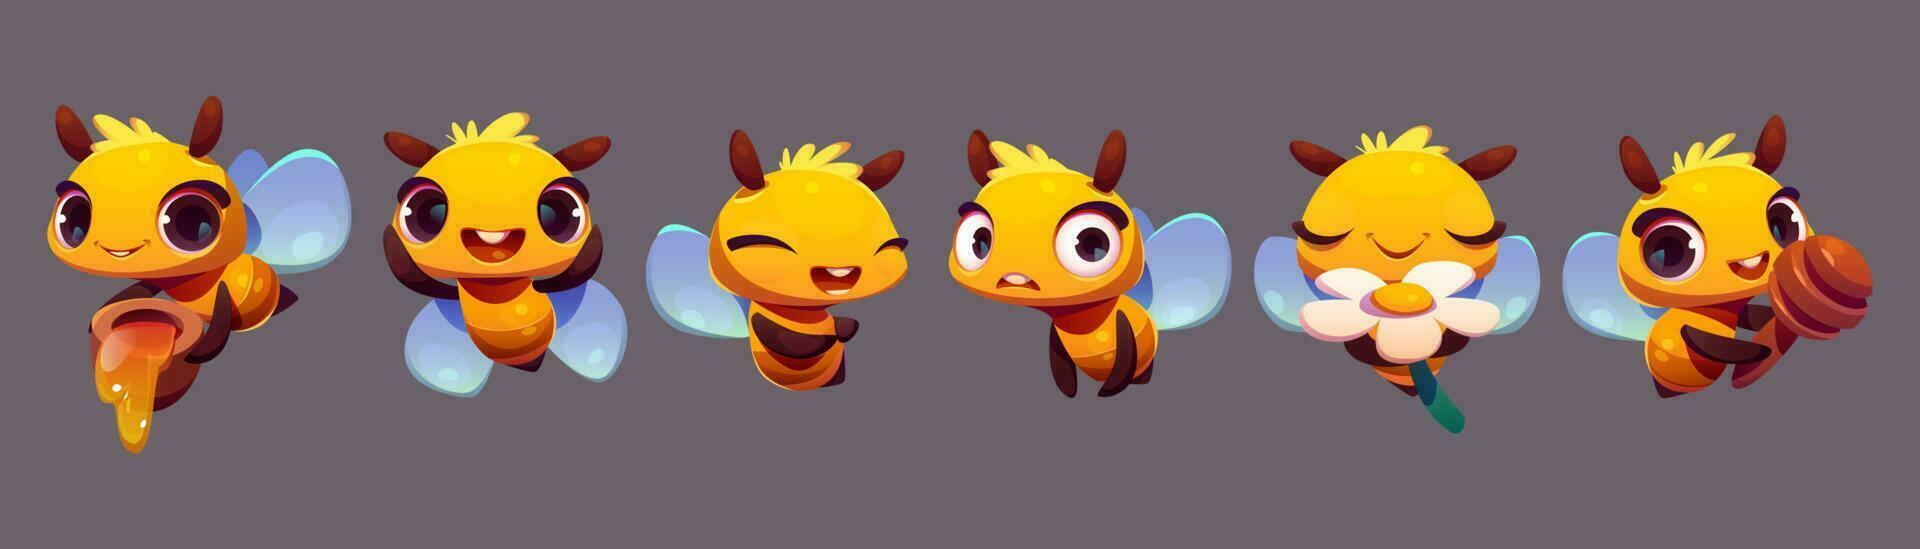 Cute bee emotion mascot, cartoon happy character vector